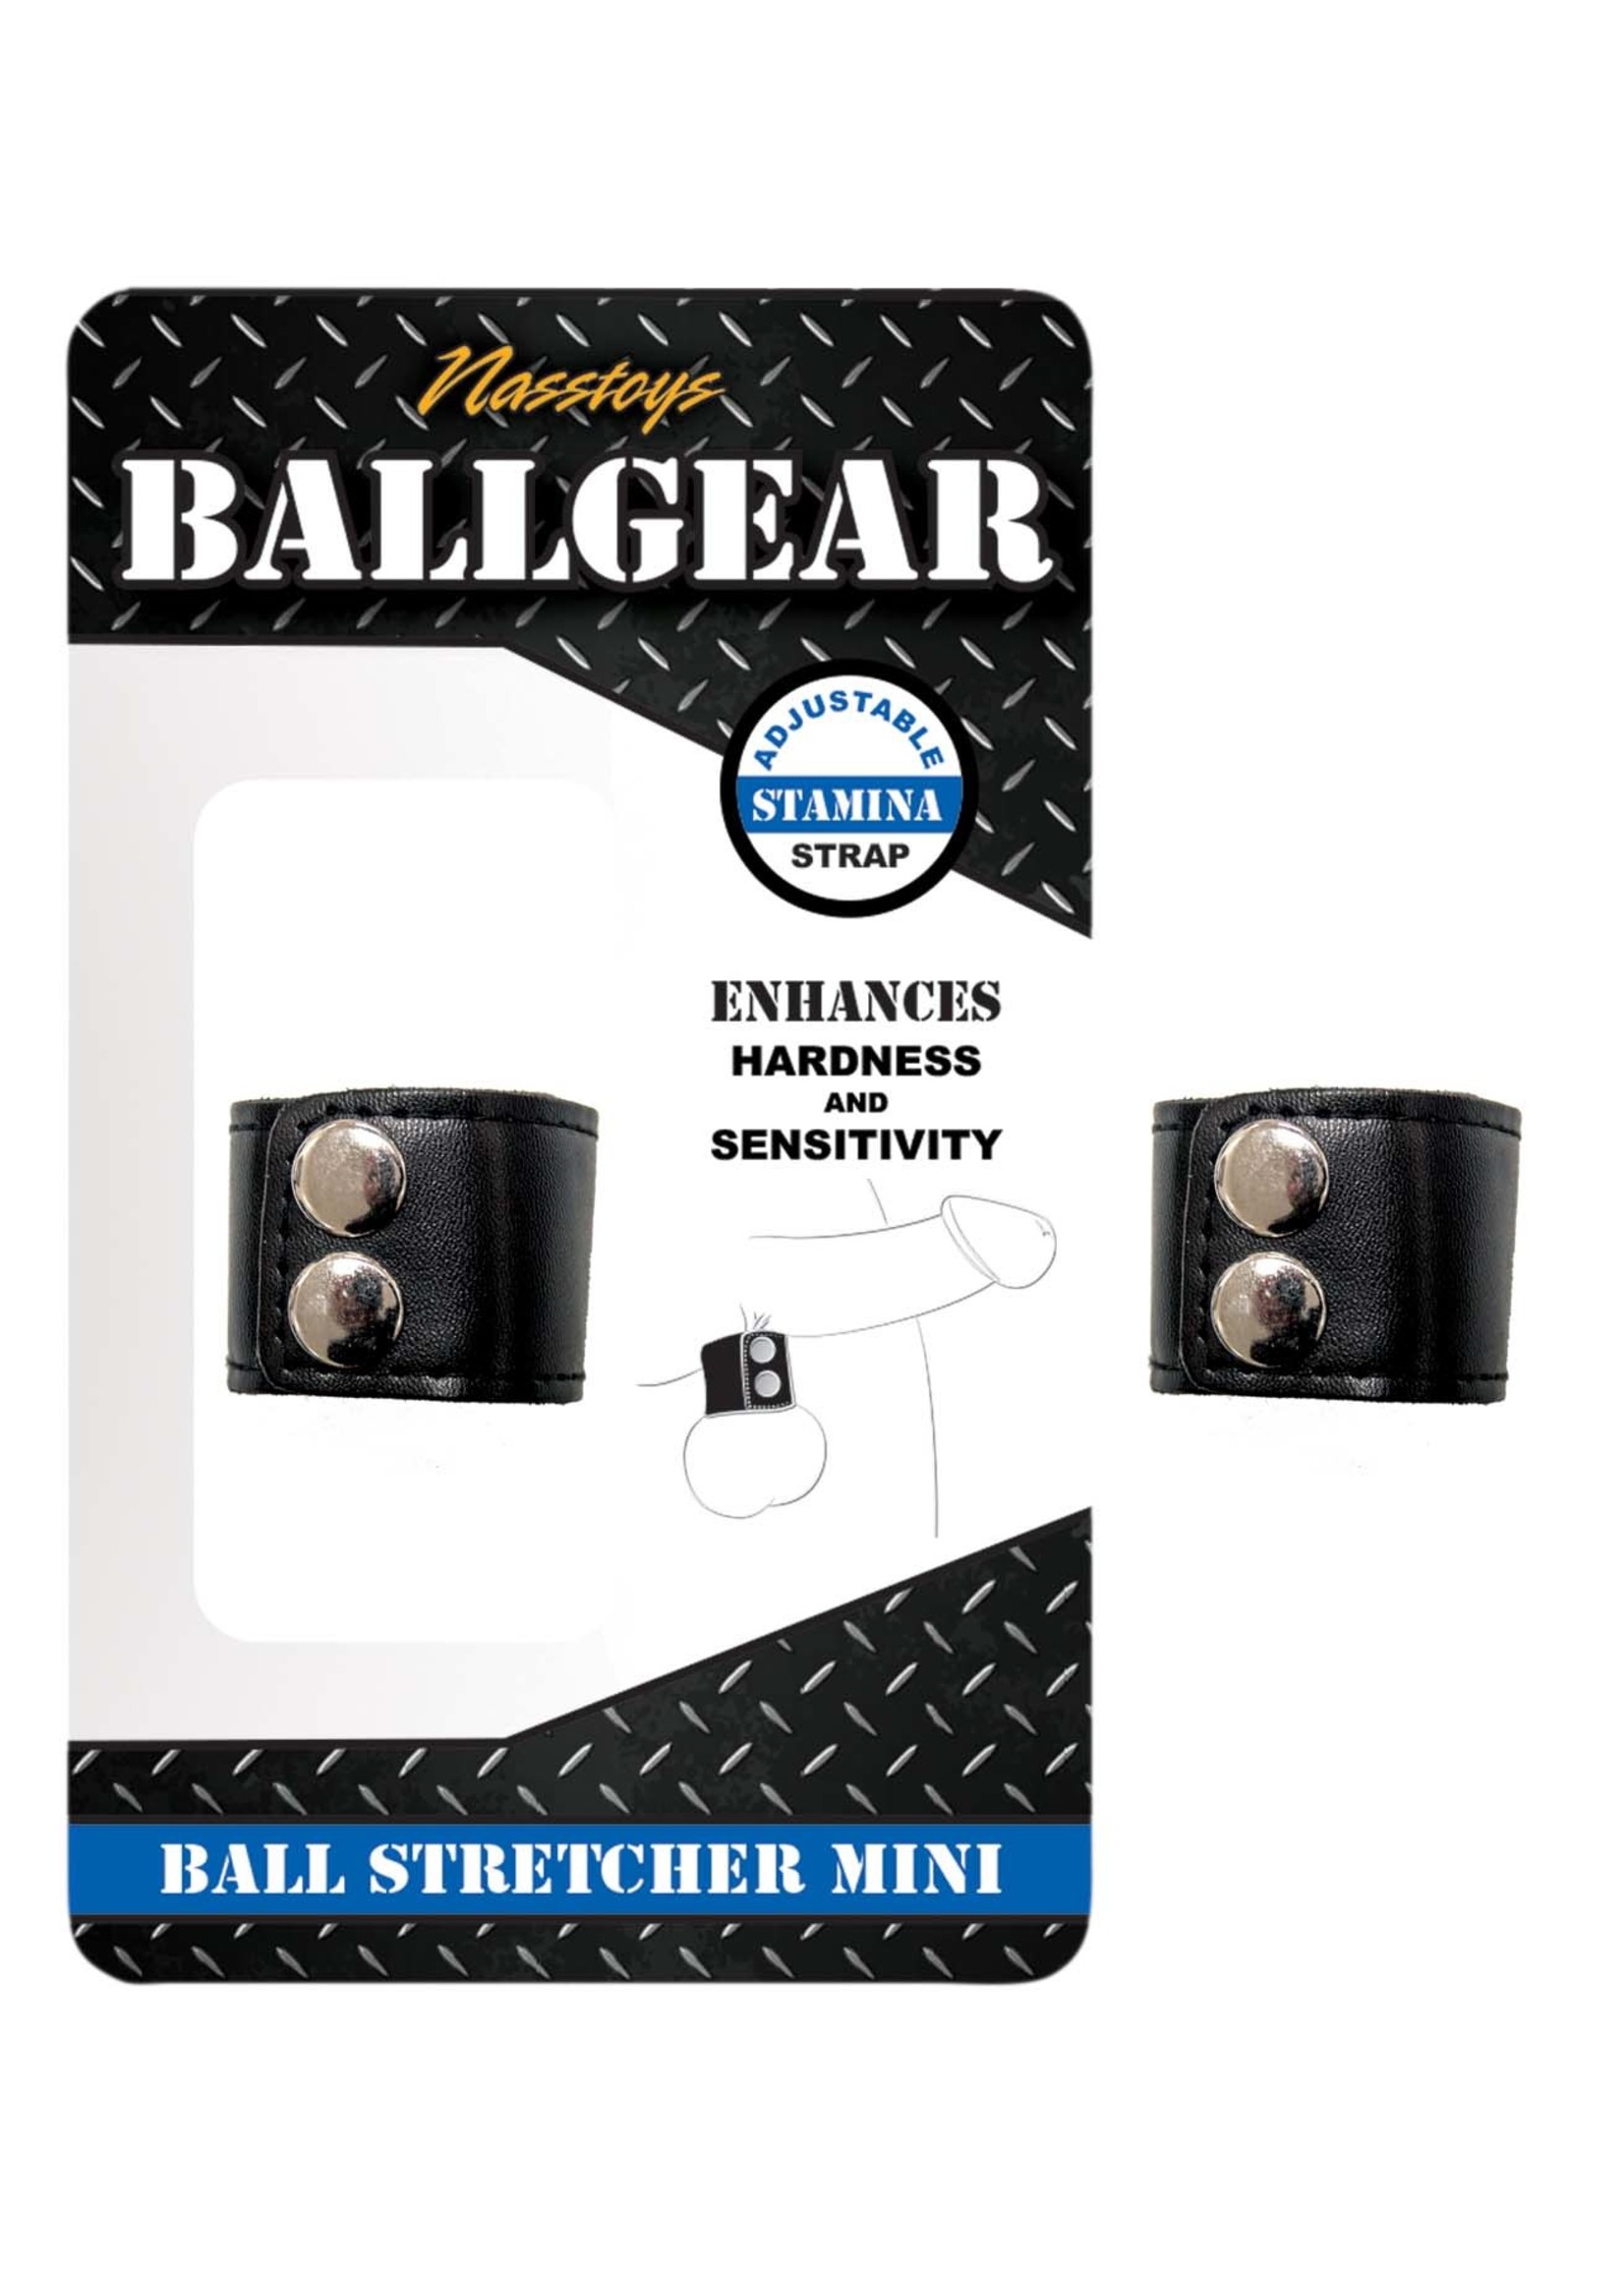 Nasstoys Ballgear Ball Stretcher Mini - Black